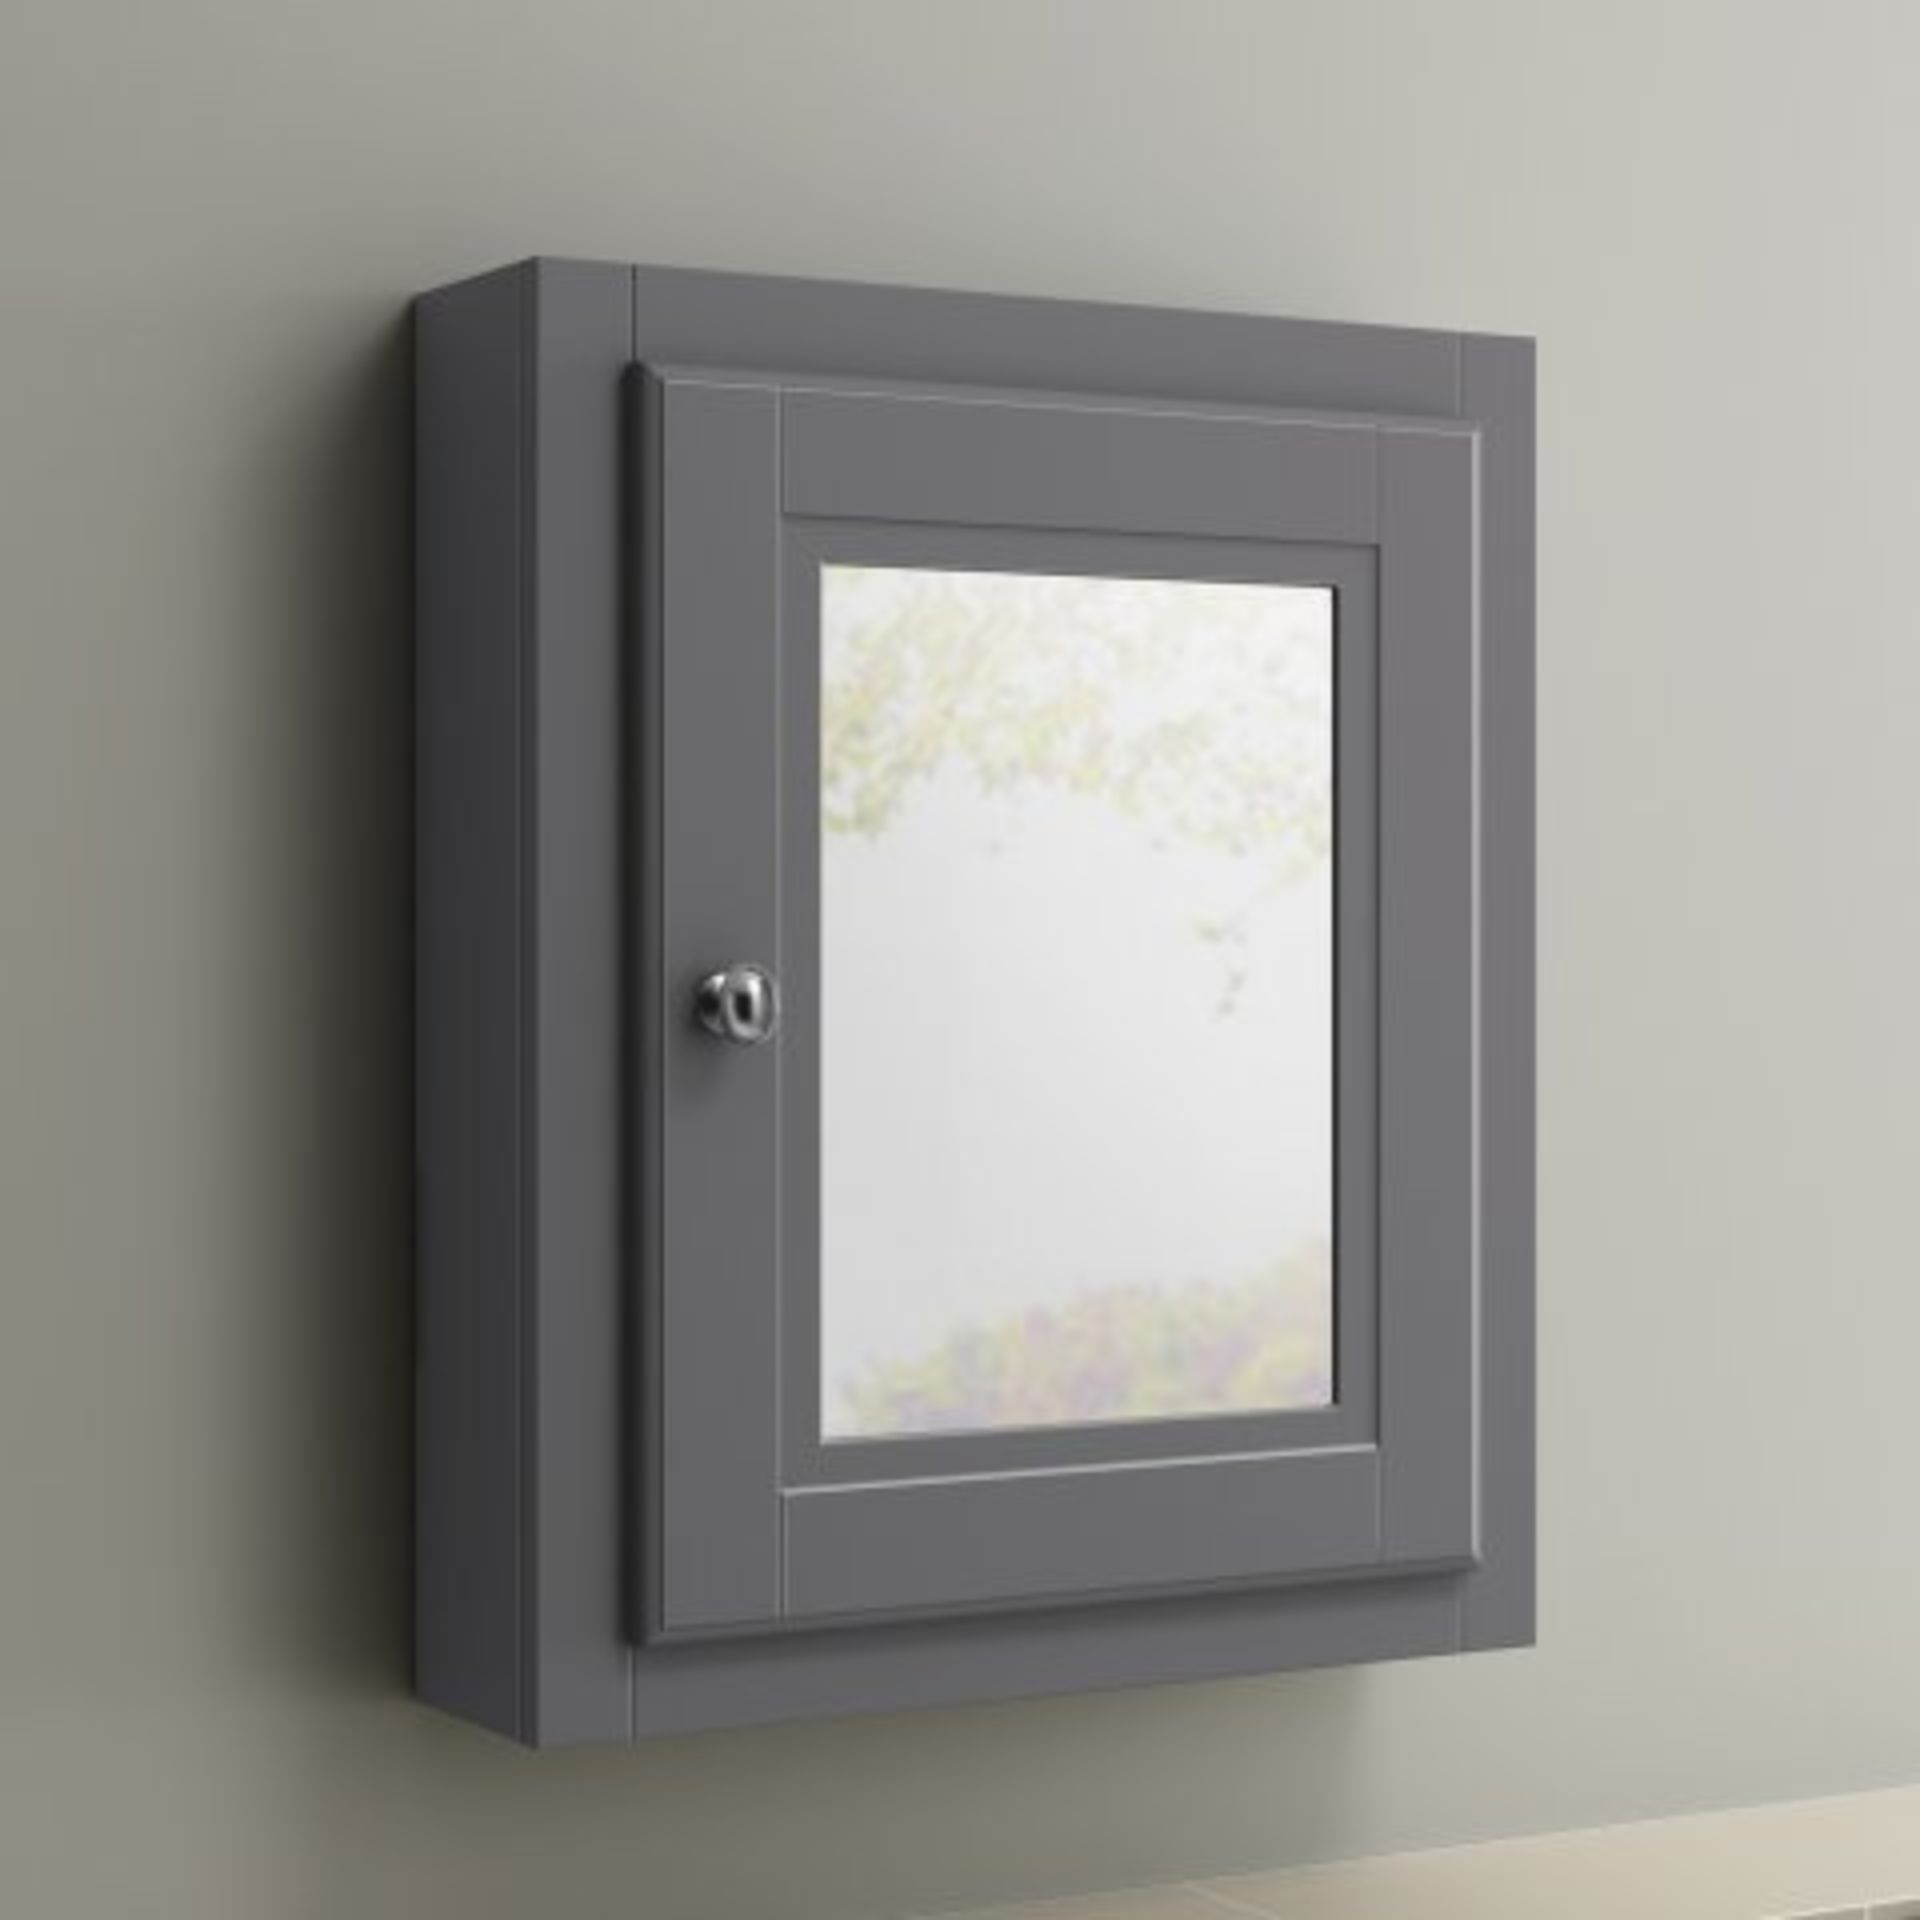 (H244) Cambridge Single Door Mirror Cabinet - Midnight Grey. RRP £299.99. Our Cambridge Midnight